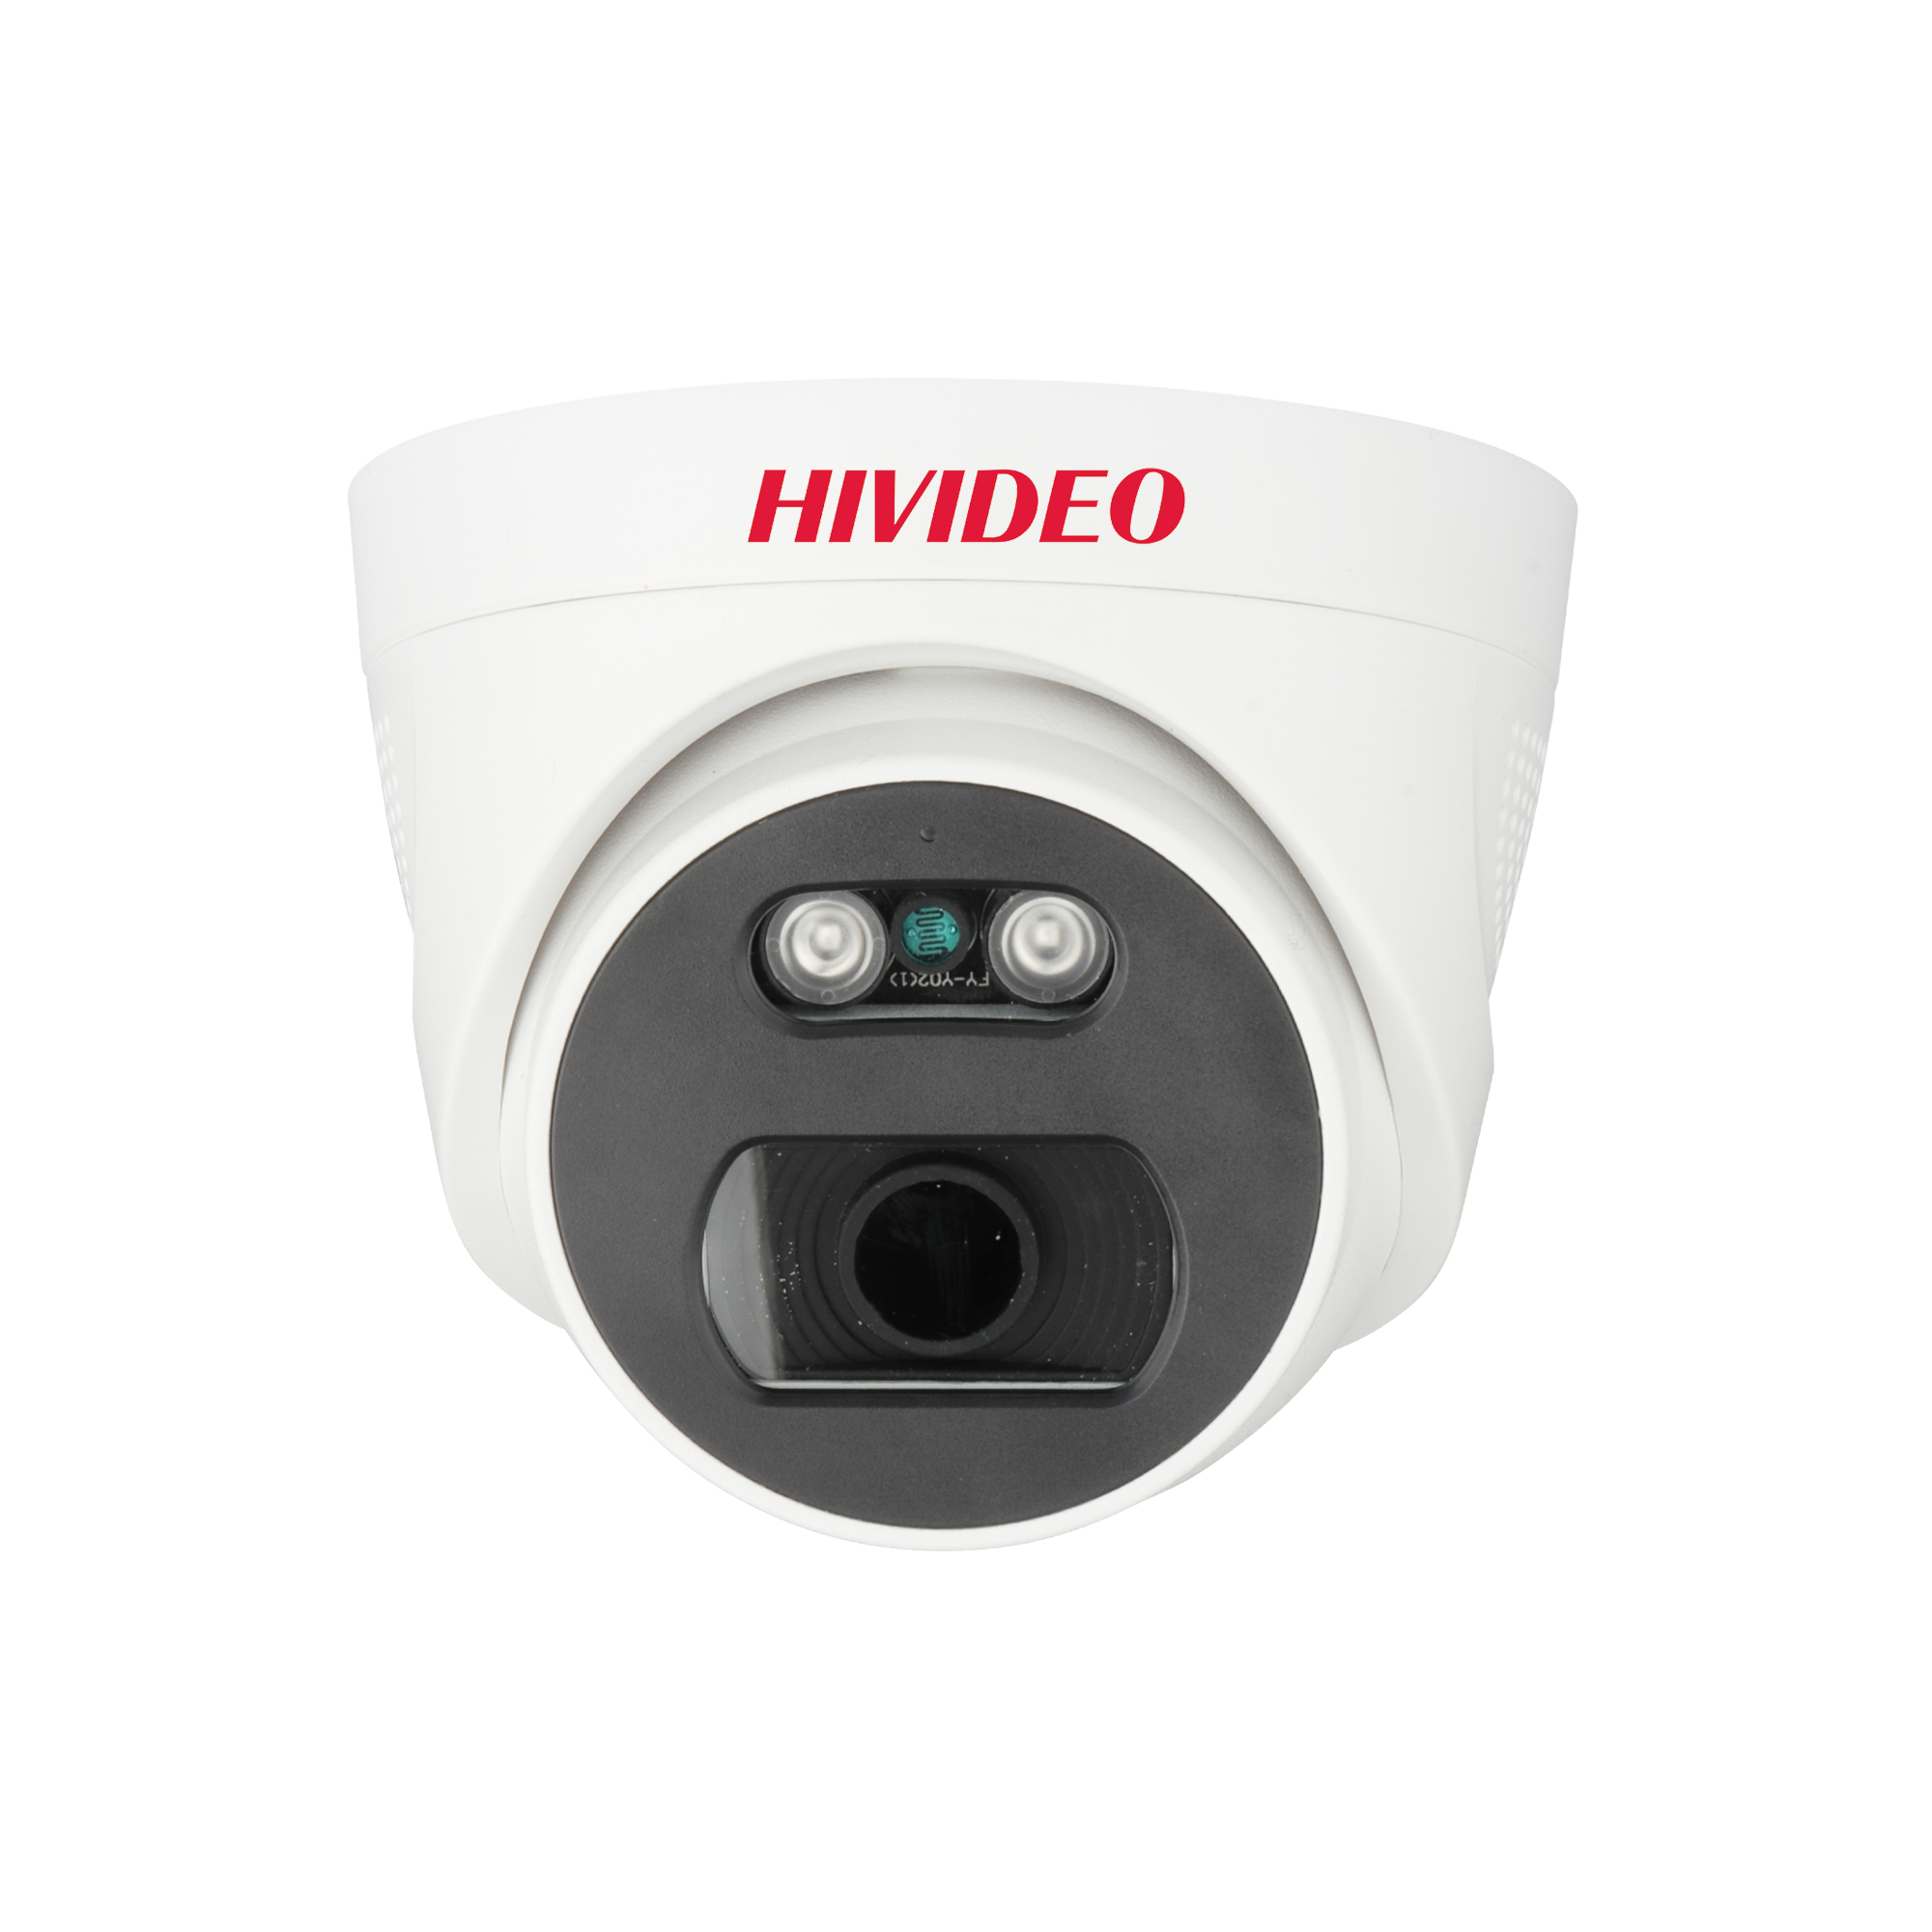 دوربین مدار بسته دام HIVIDEO مدل HI-D73605